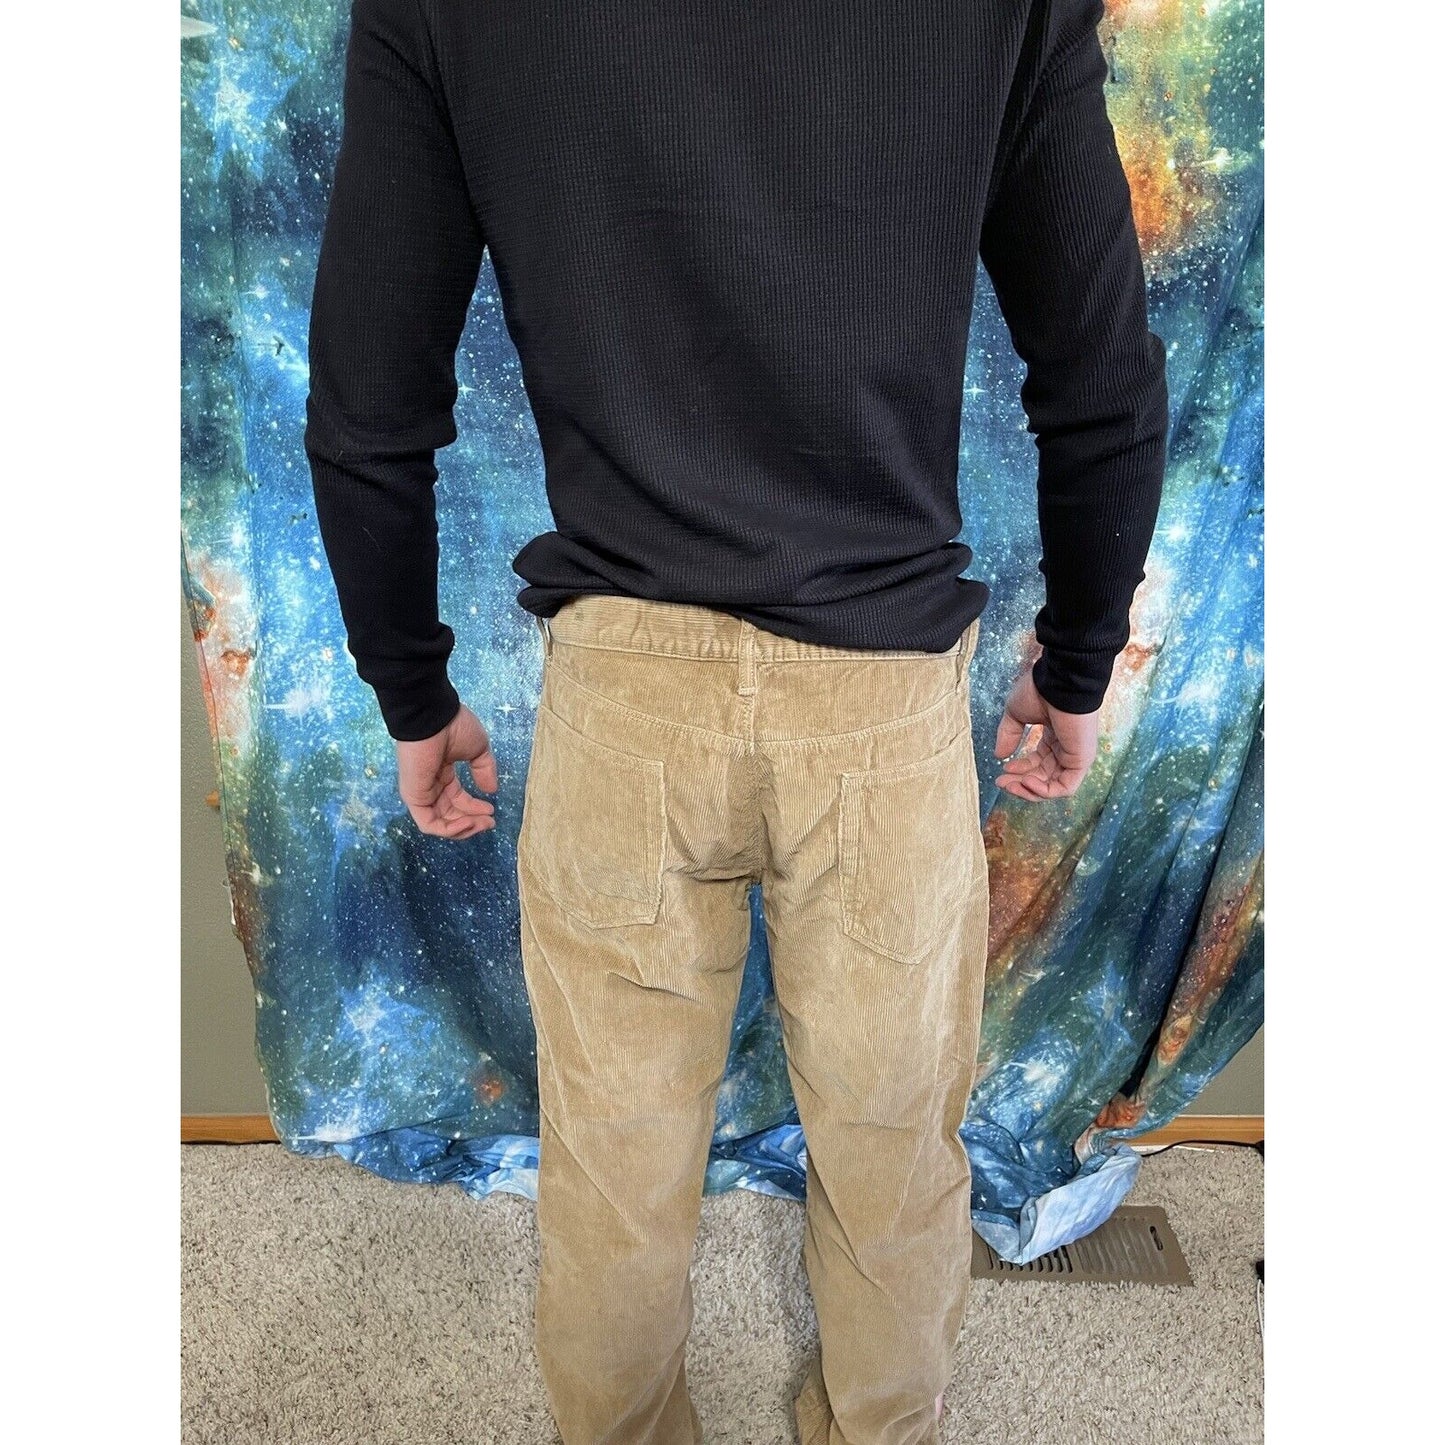 Men’s Tan Gap Pants 36x32 straight fit